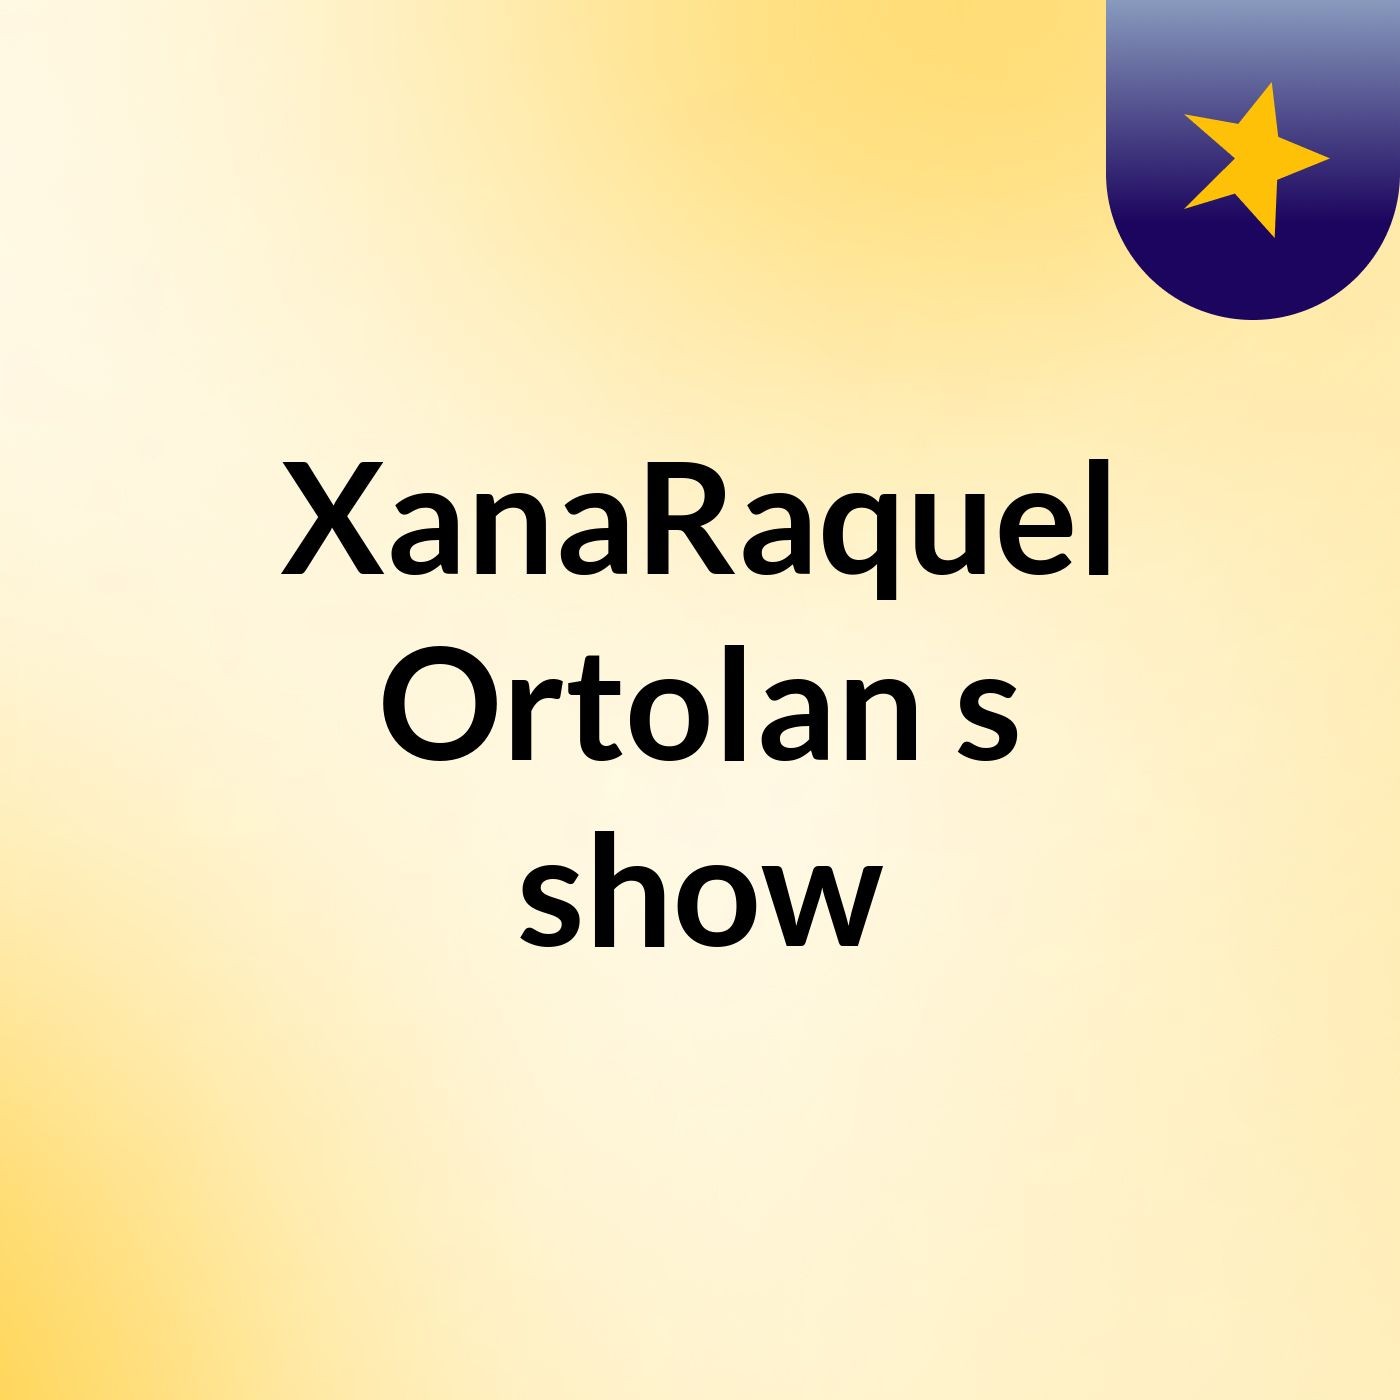 XanaRaquel Ortolan's show